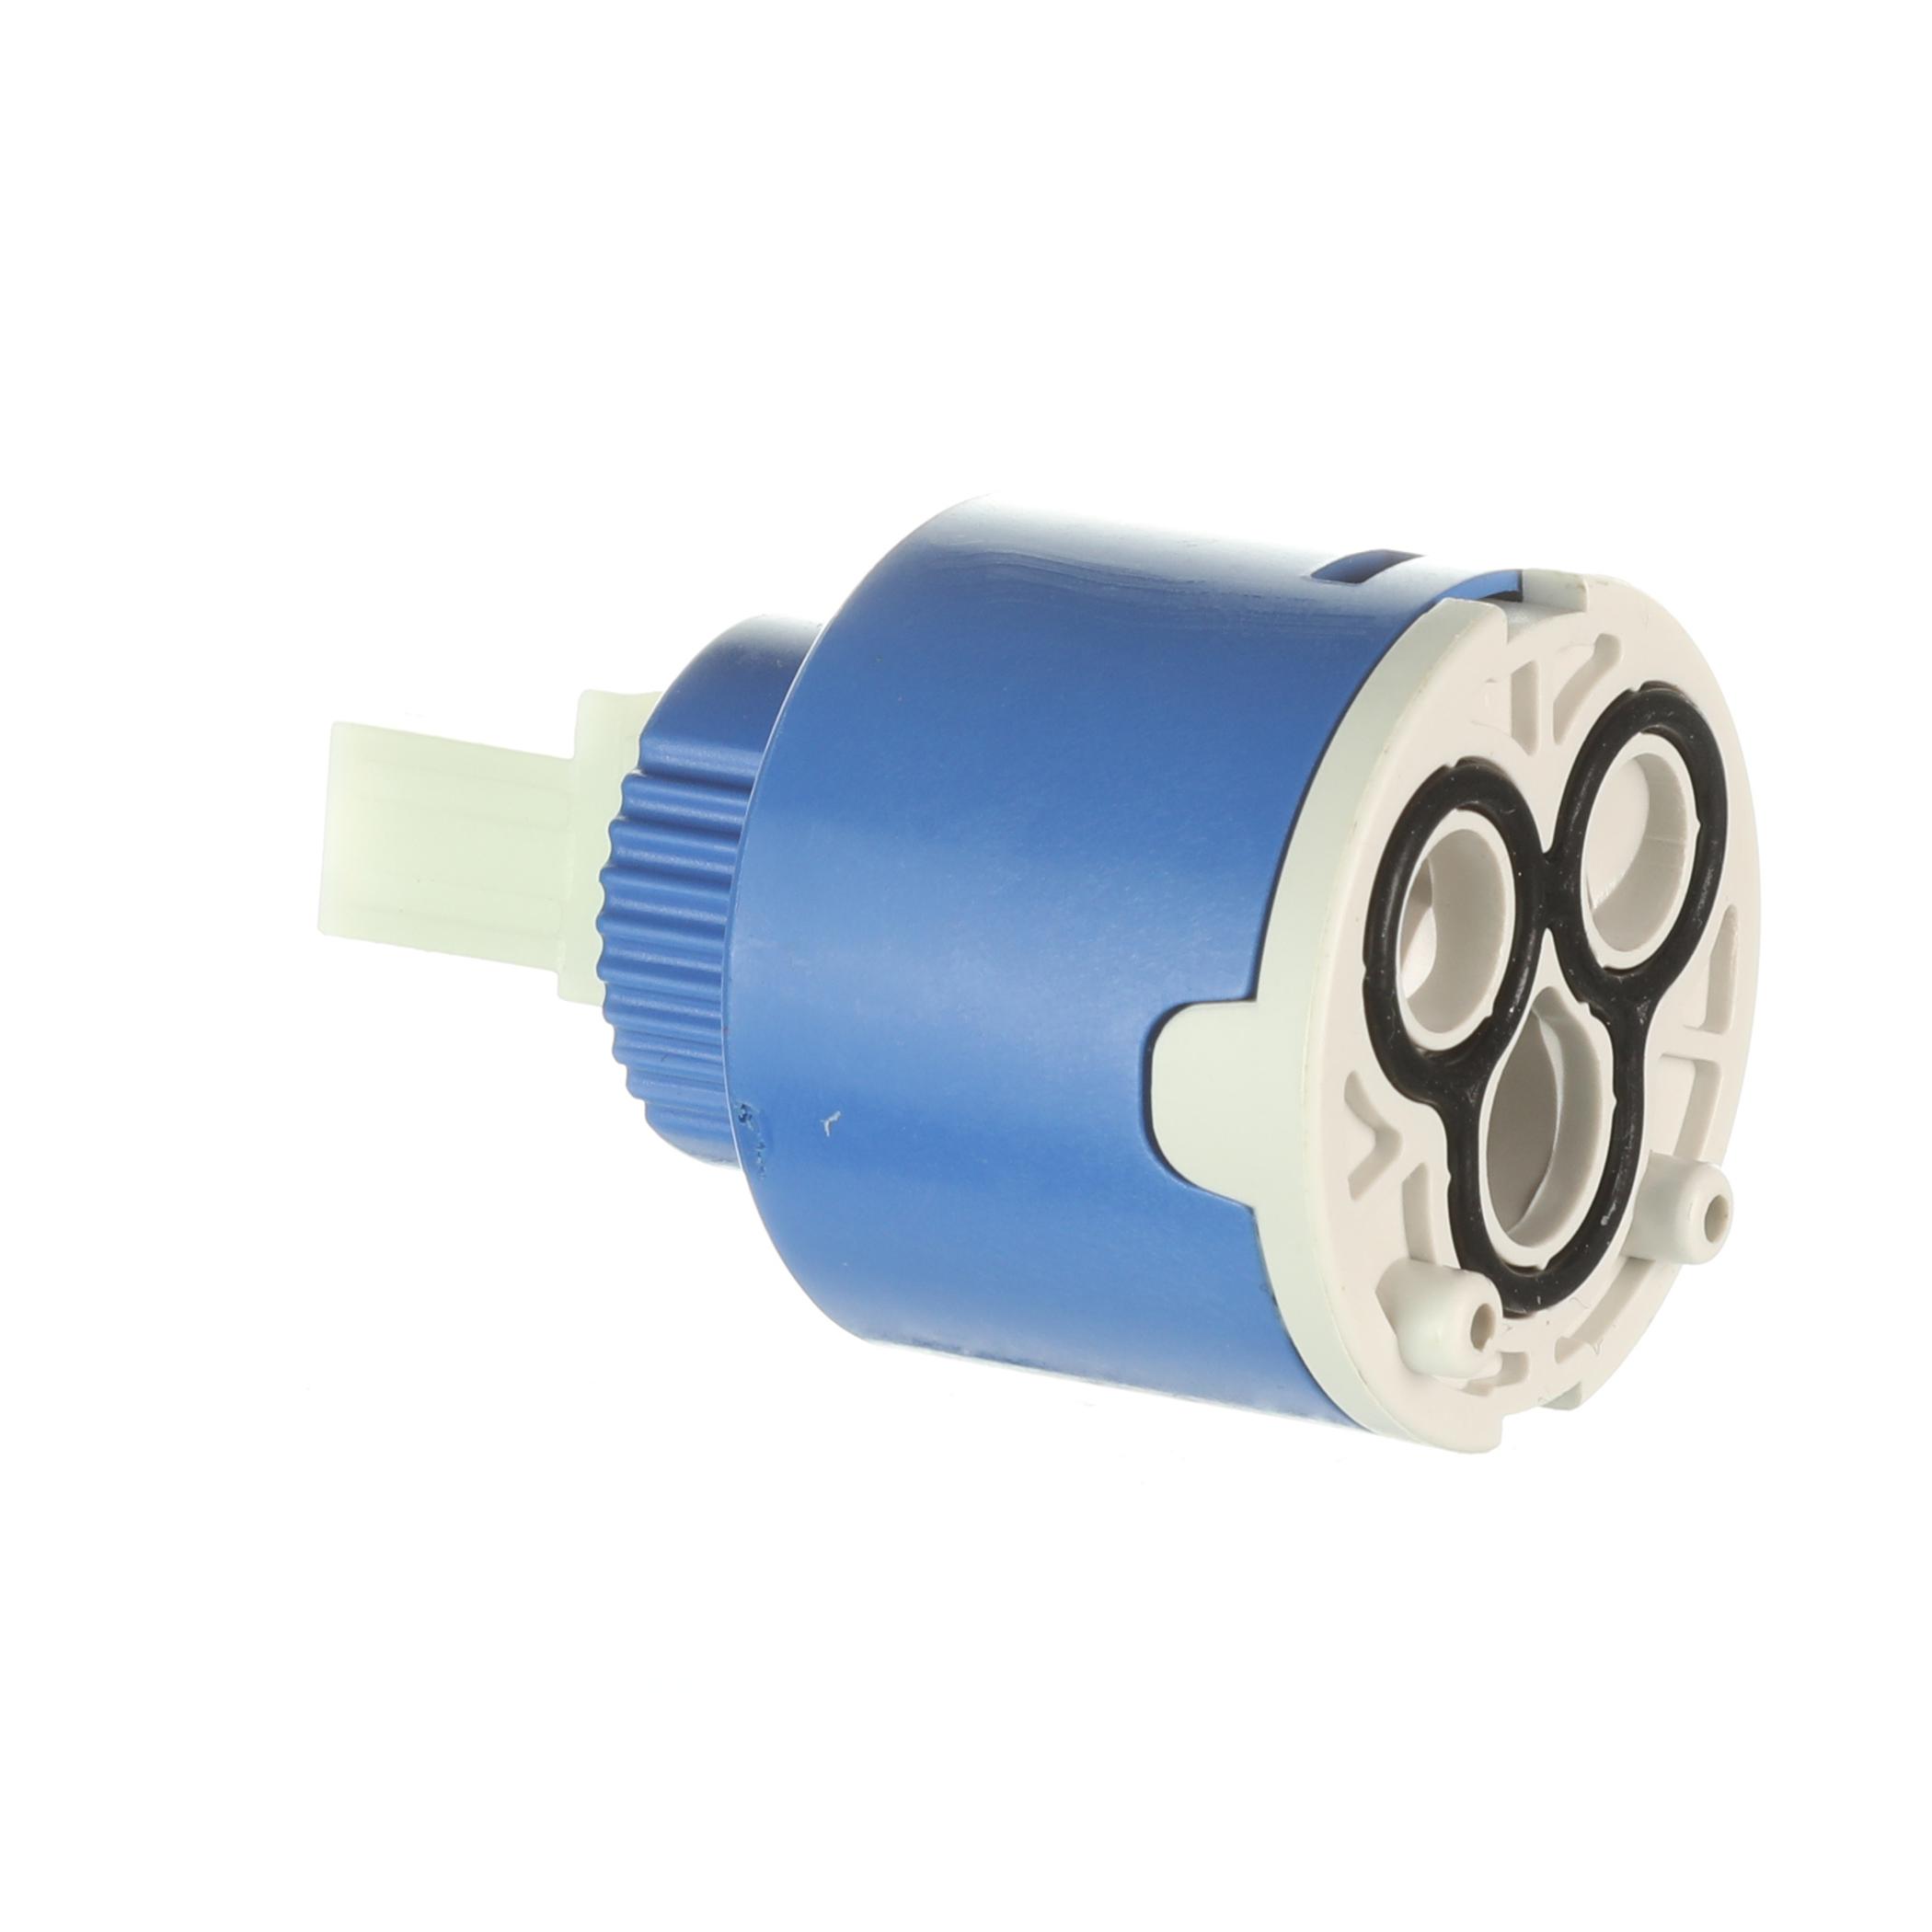 Danco GB-1 Faucet Cartridge for AquaSource & Glacier Bay Single-Handle Faucet